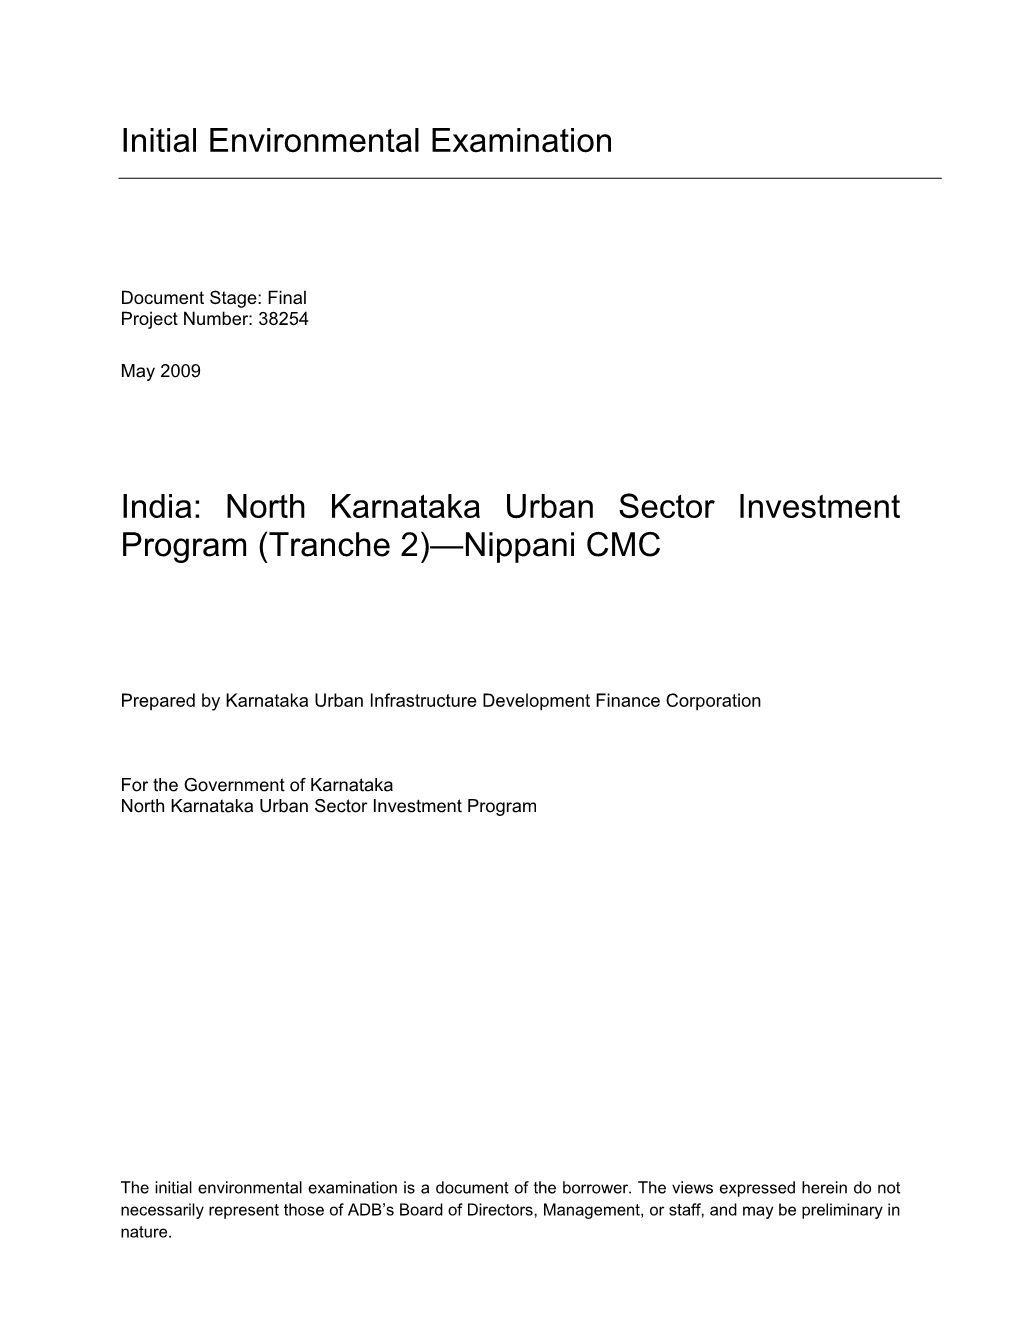 North Karnataka Urban Sector Investment Program (Tranche 2)—Nippani CMC